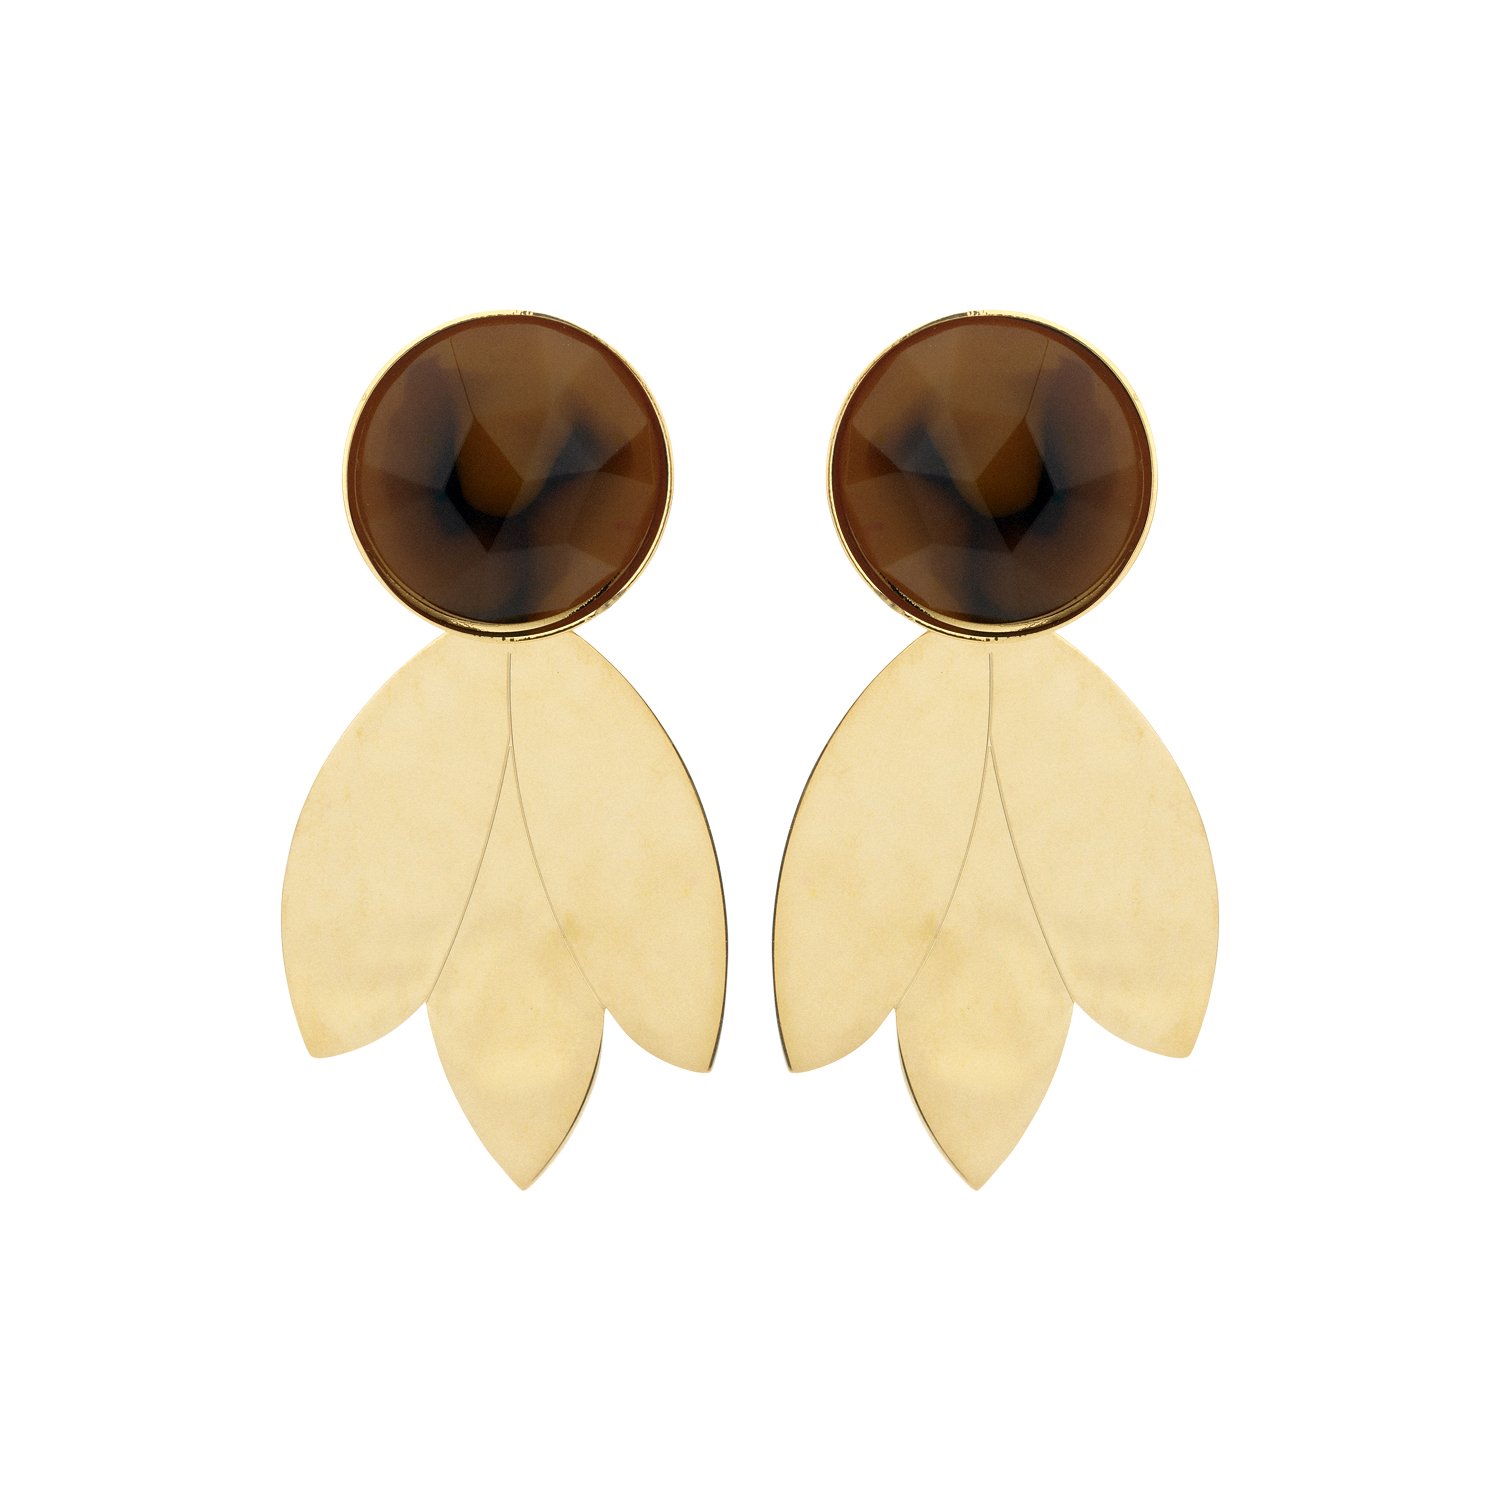 Leaf shorty cognac mix earrings